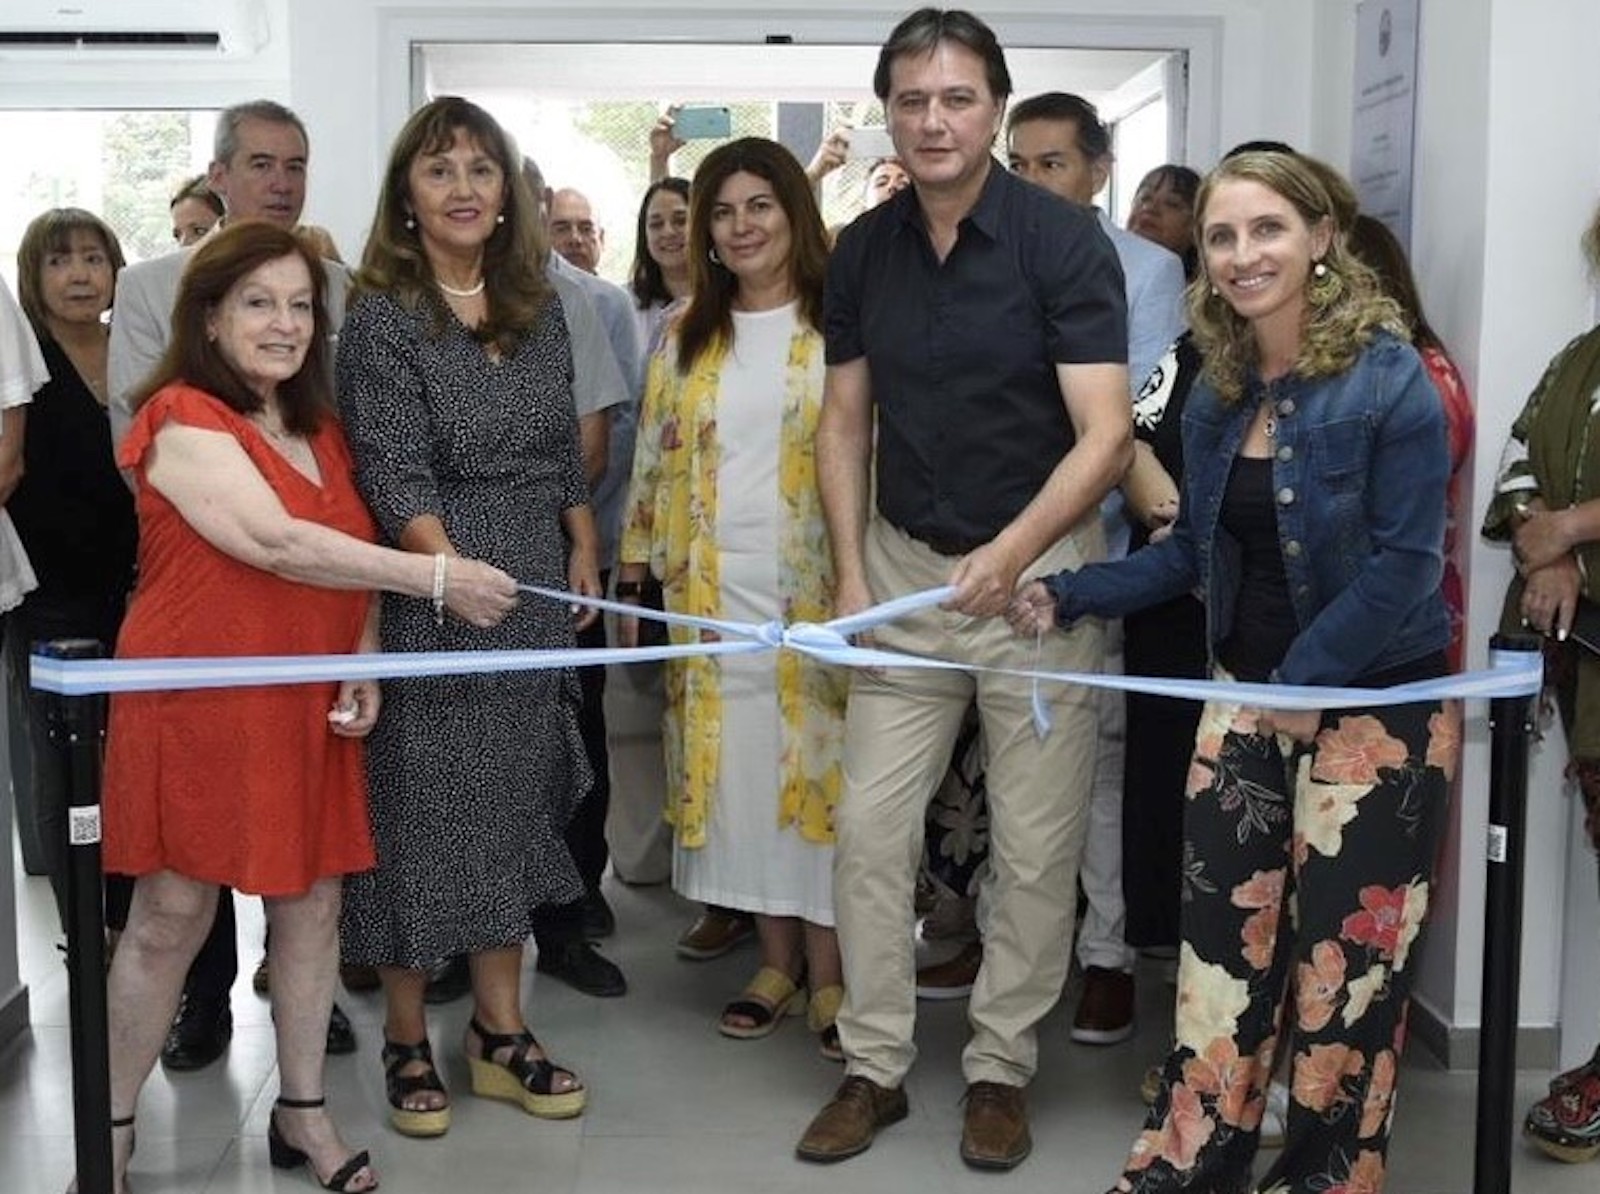 PAE acompaña la reinauguración del Centro de Salud “Dr. René Favaloro” de Rada Tilly -